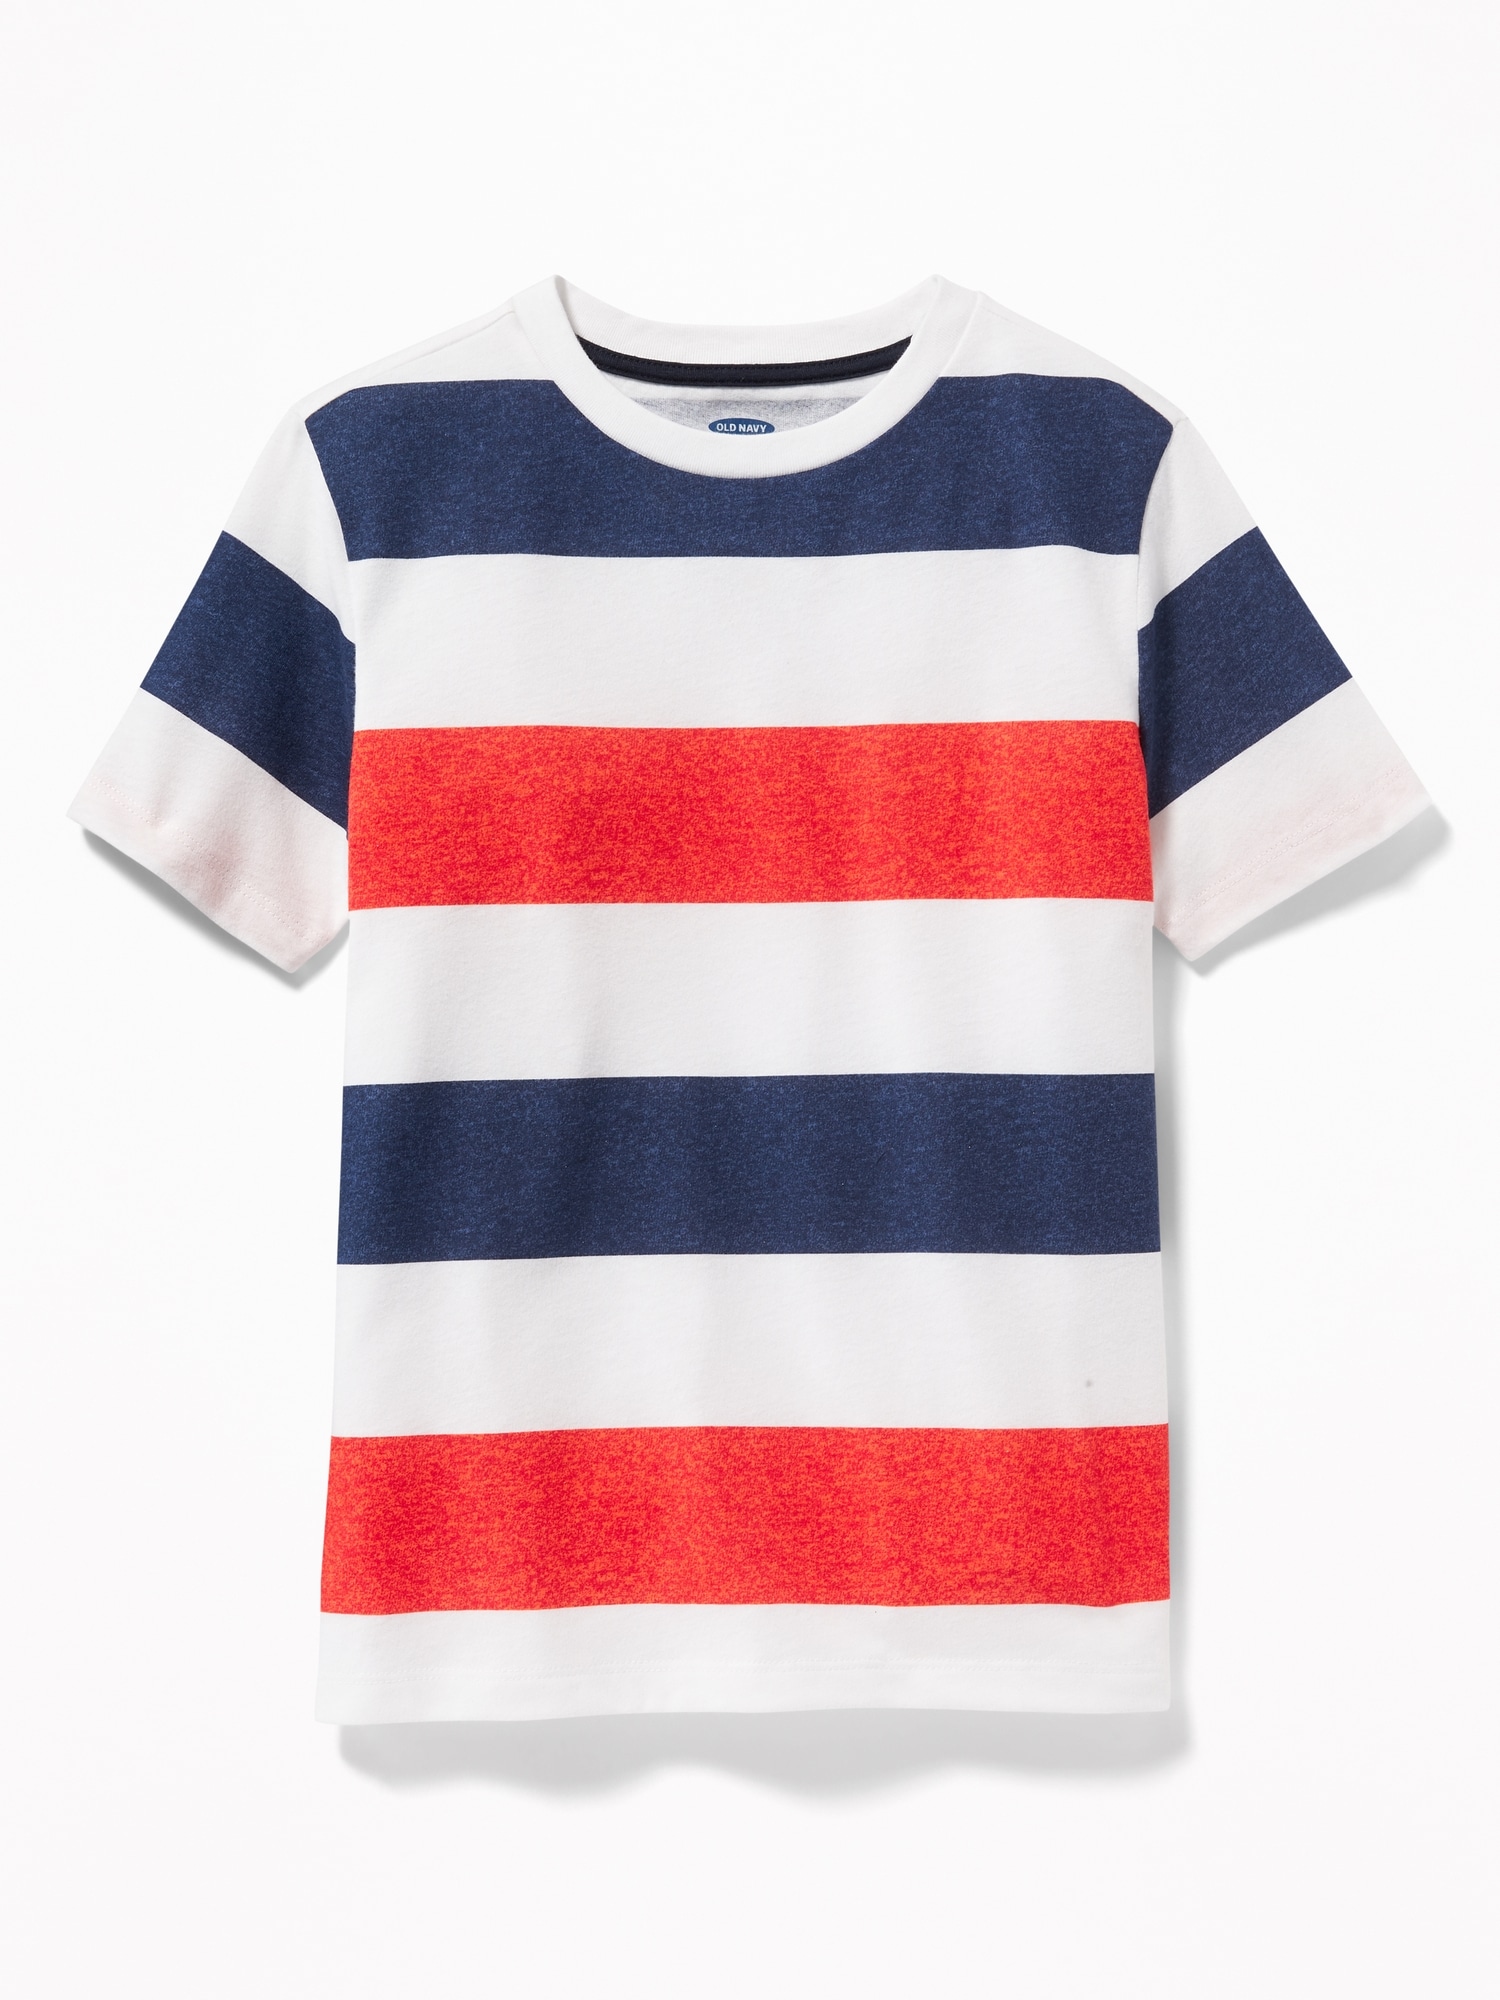 For Bold-Stripe T-Shirt Navy Boys Old Softest |